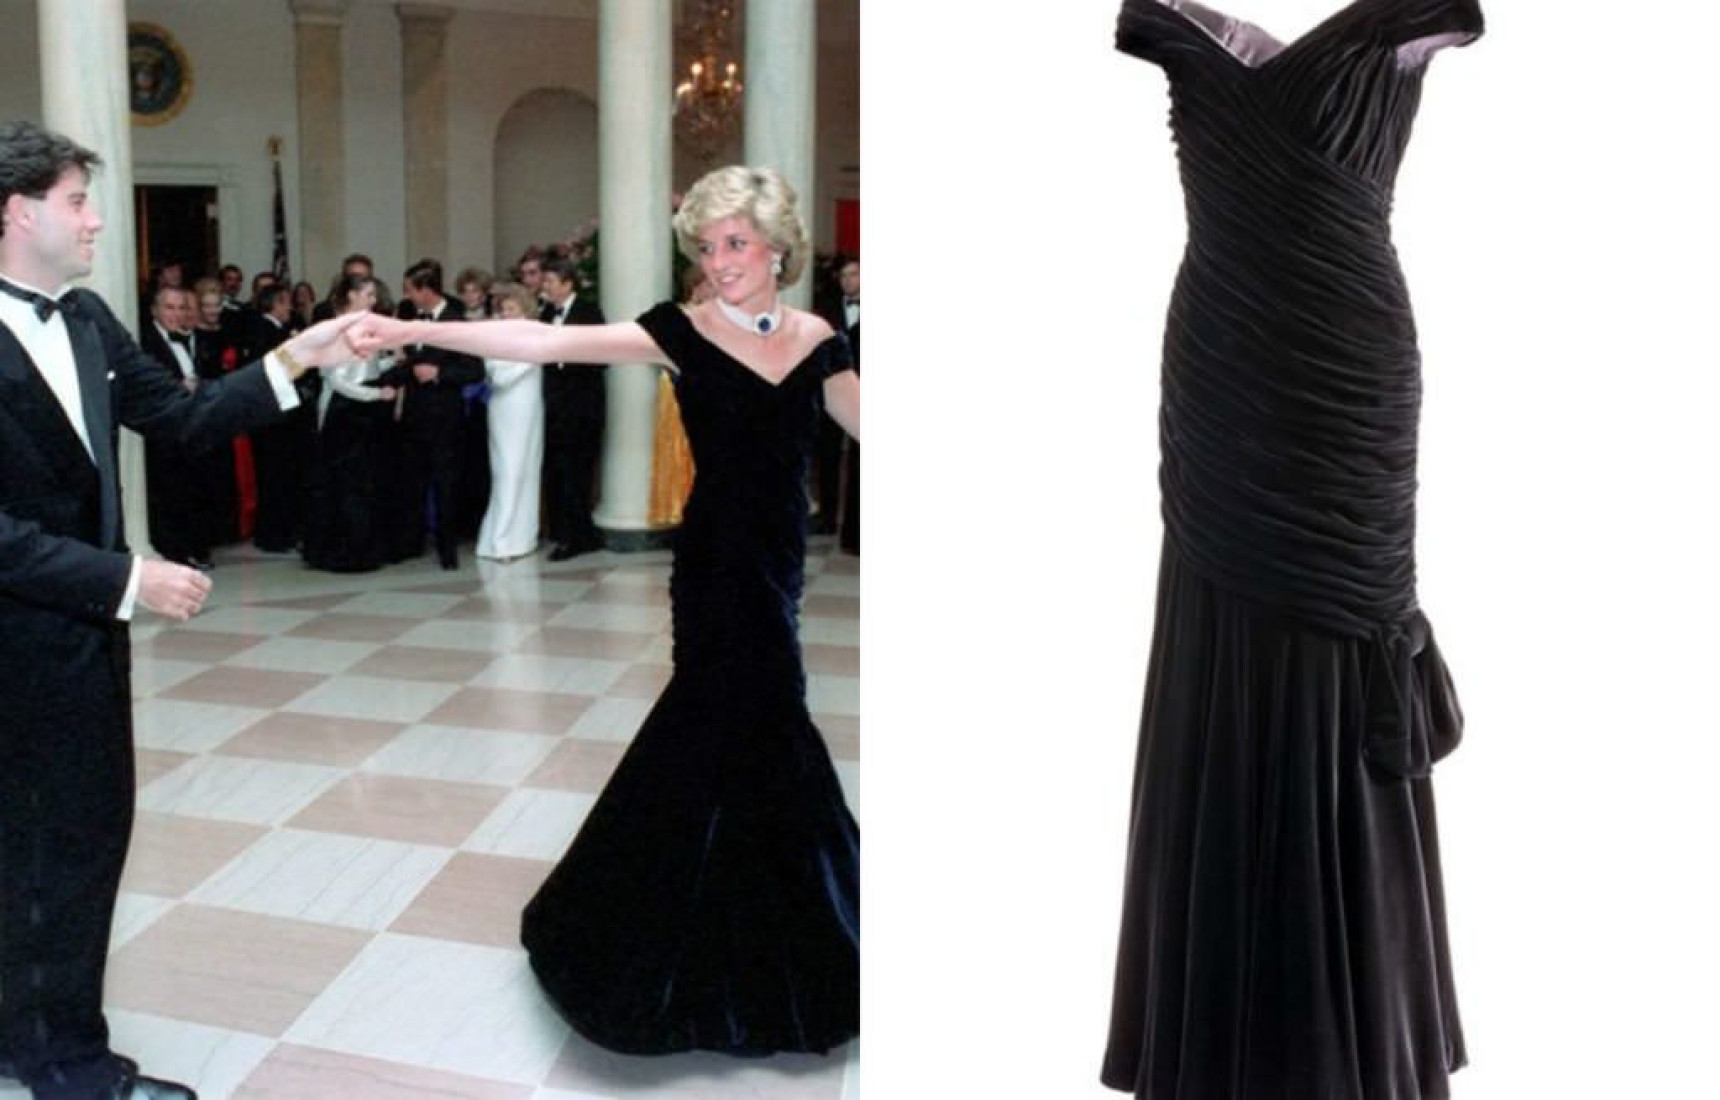 Princess Diana and John Travolta dancing - Diana in black dress